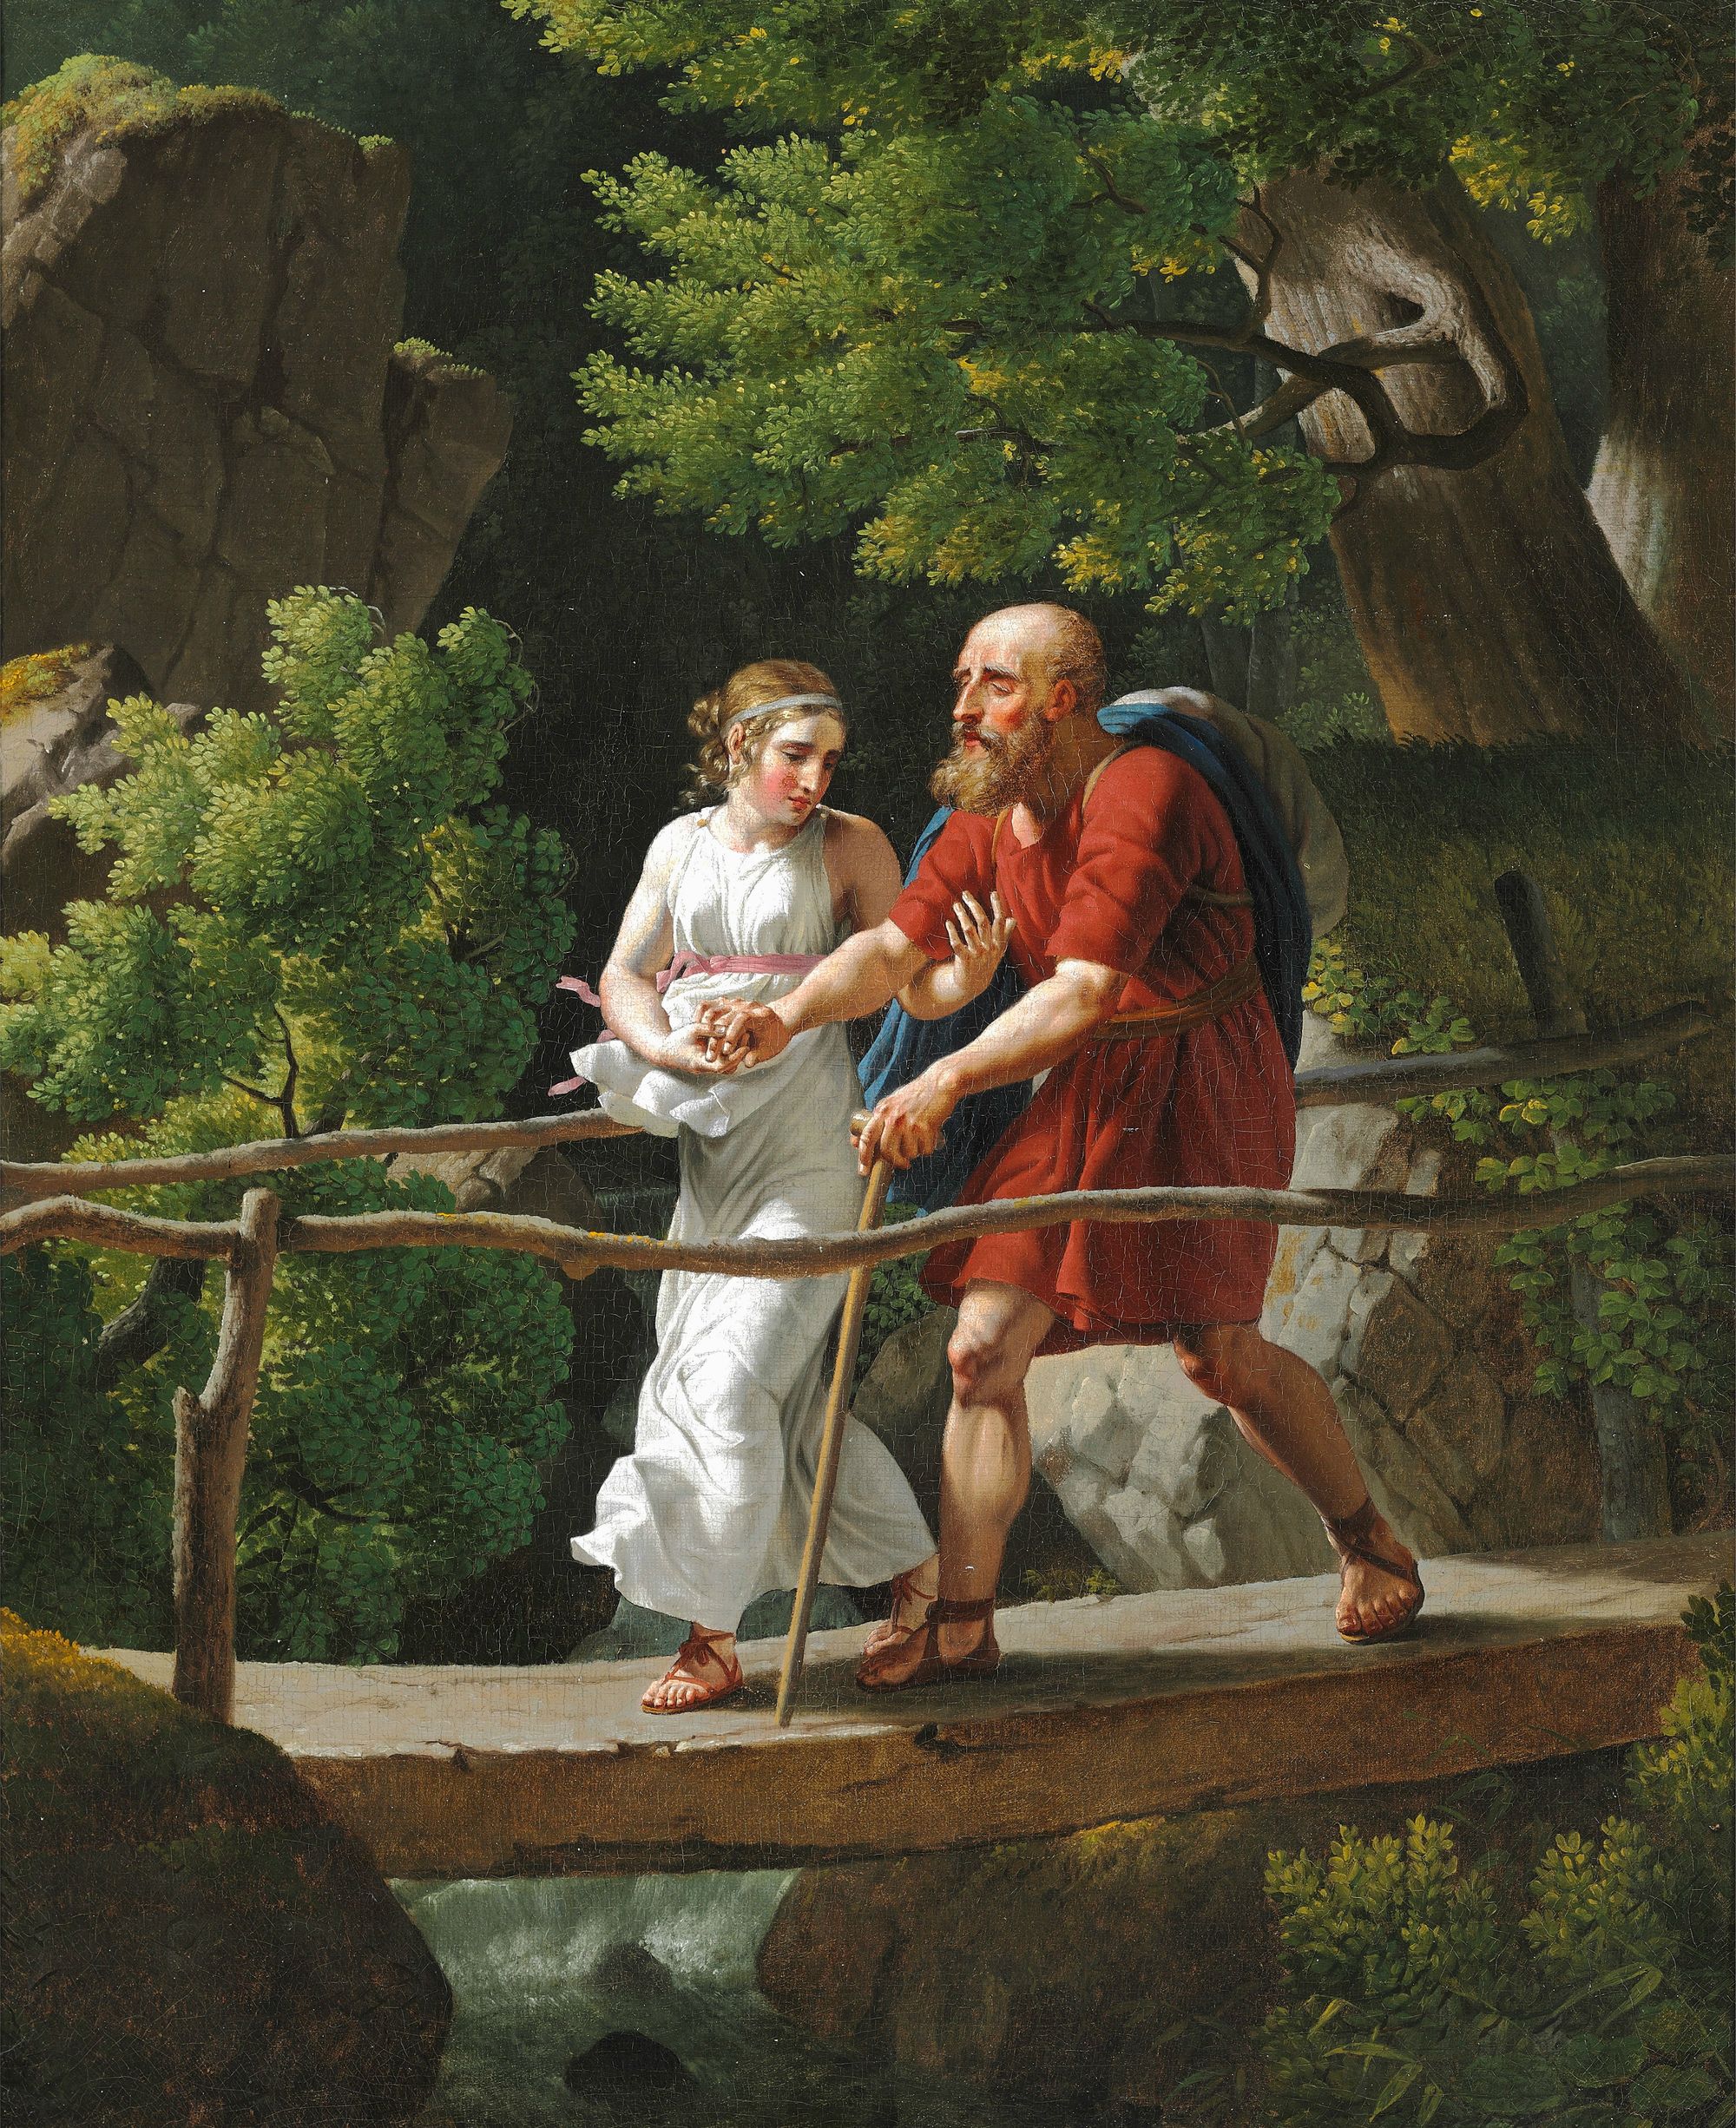 Edipo cegado caminando con su hija Antigona.